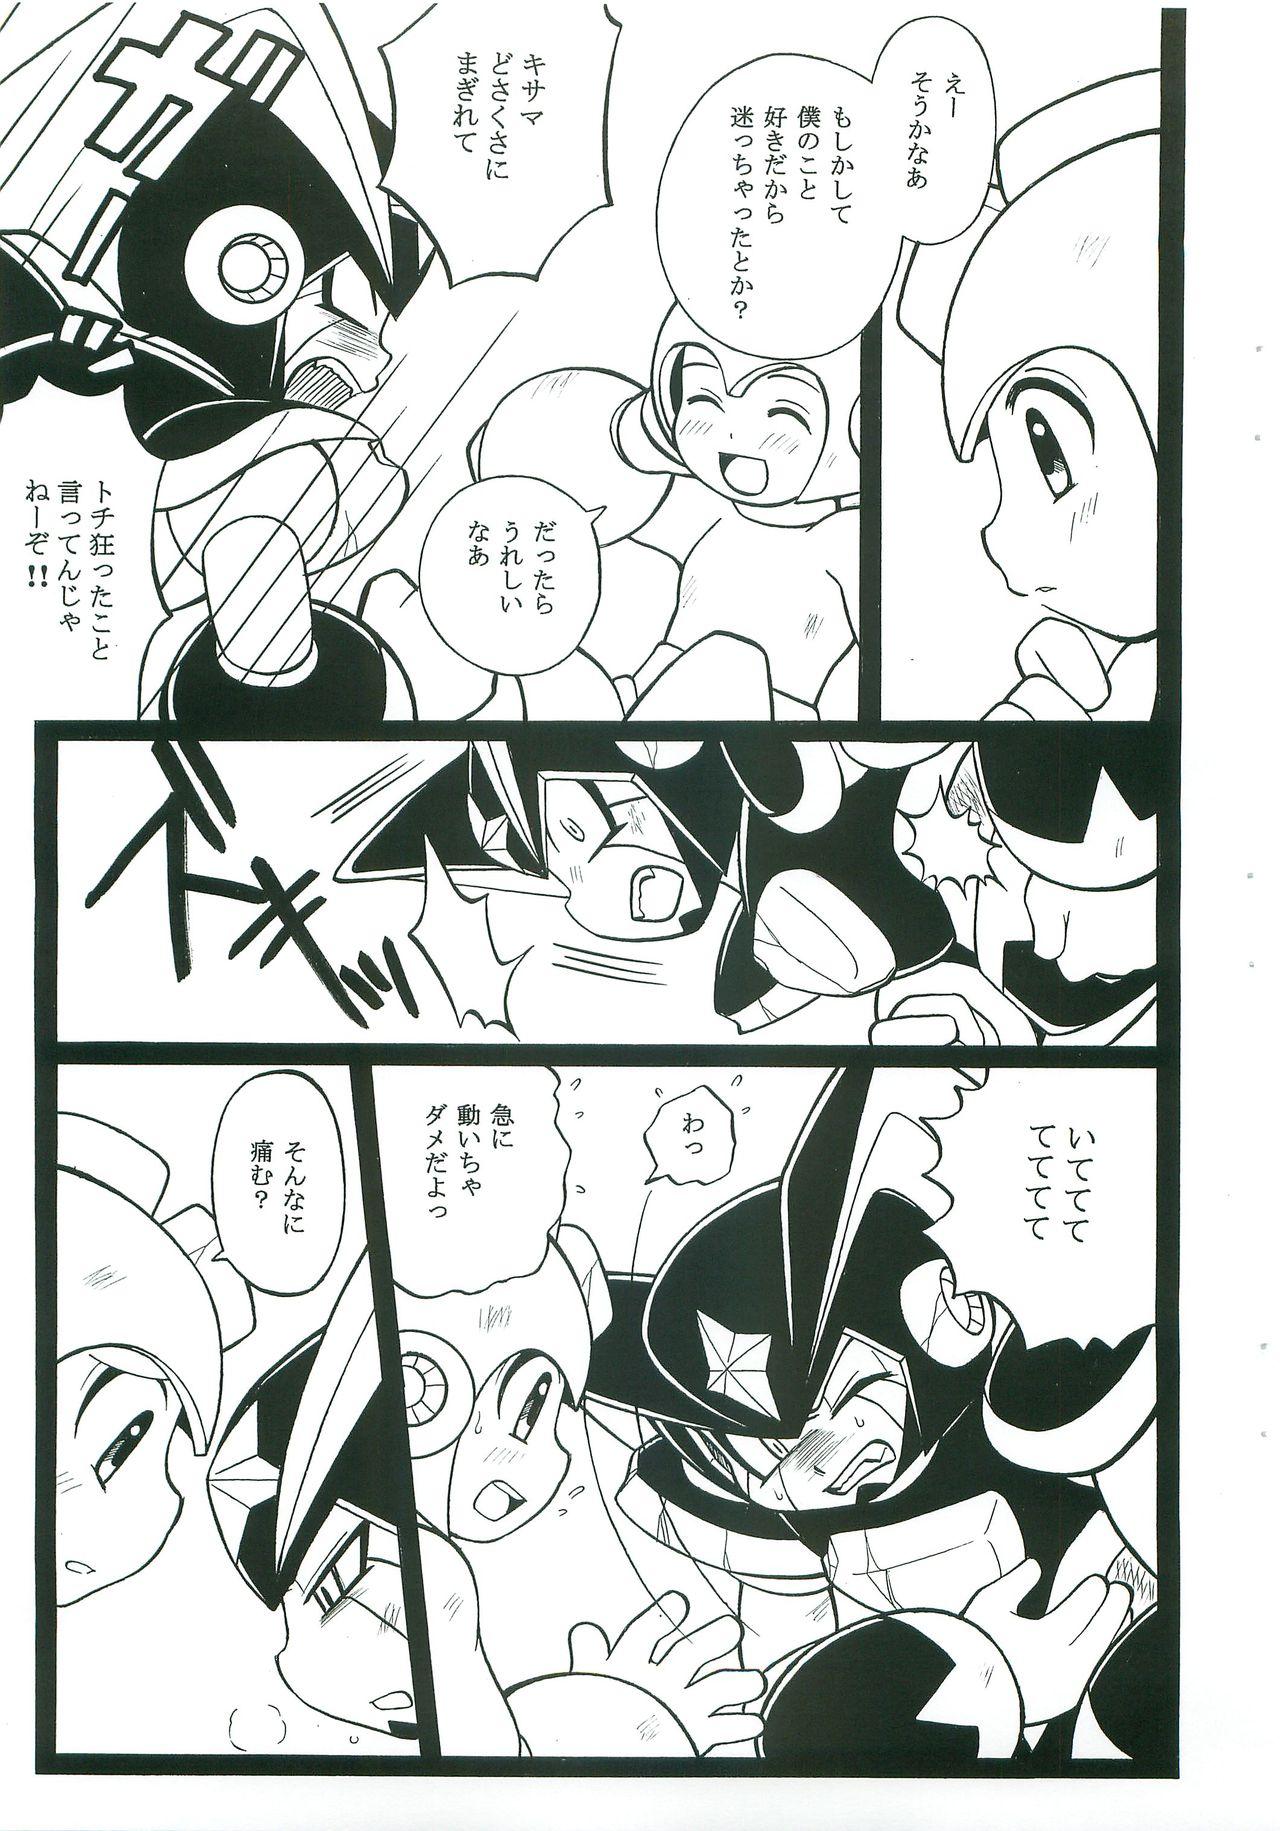 Nurugel appassionato - Megaman Moneytalks - Page 4